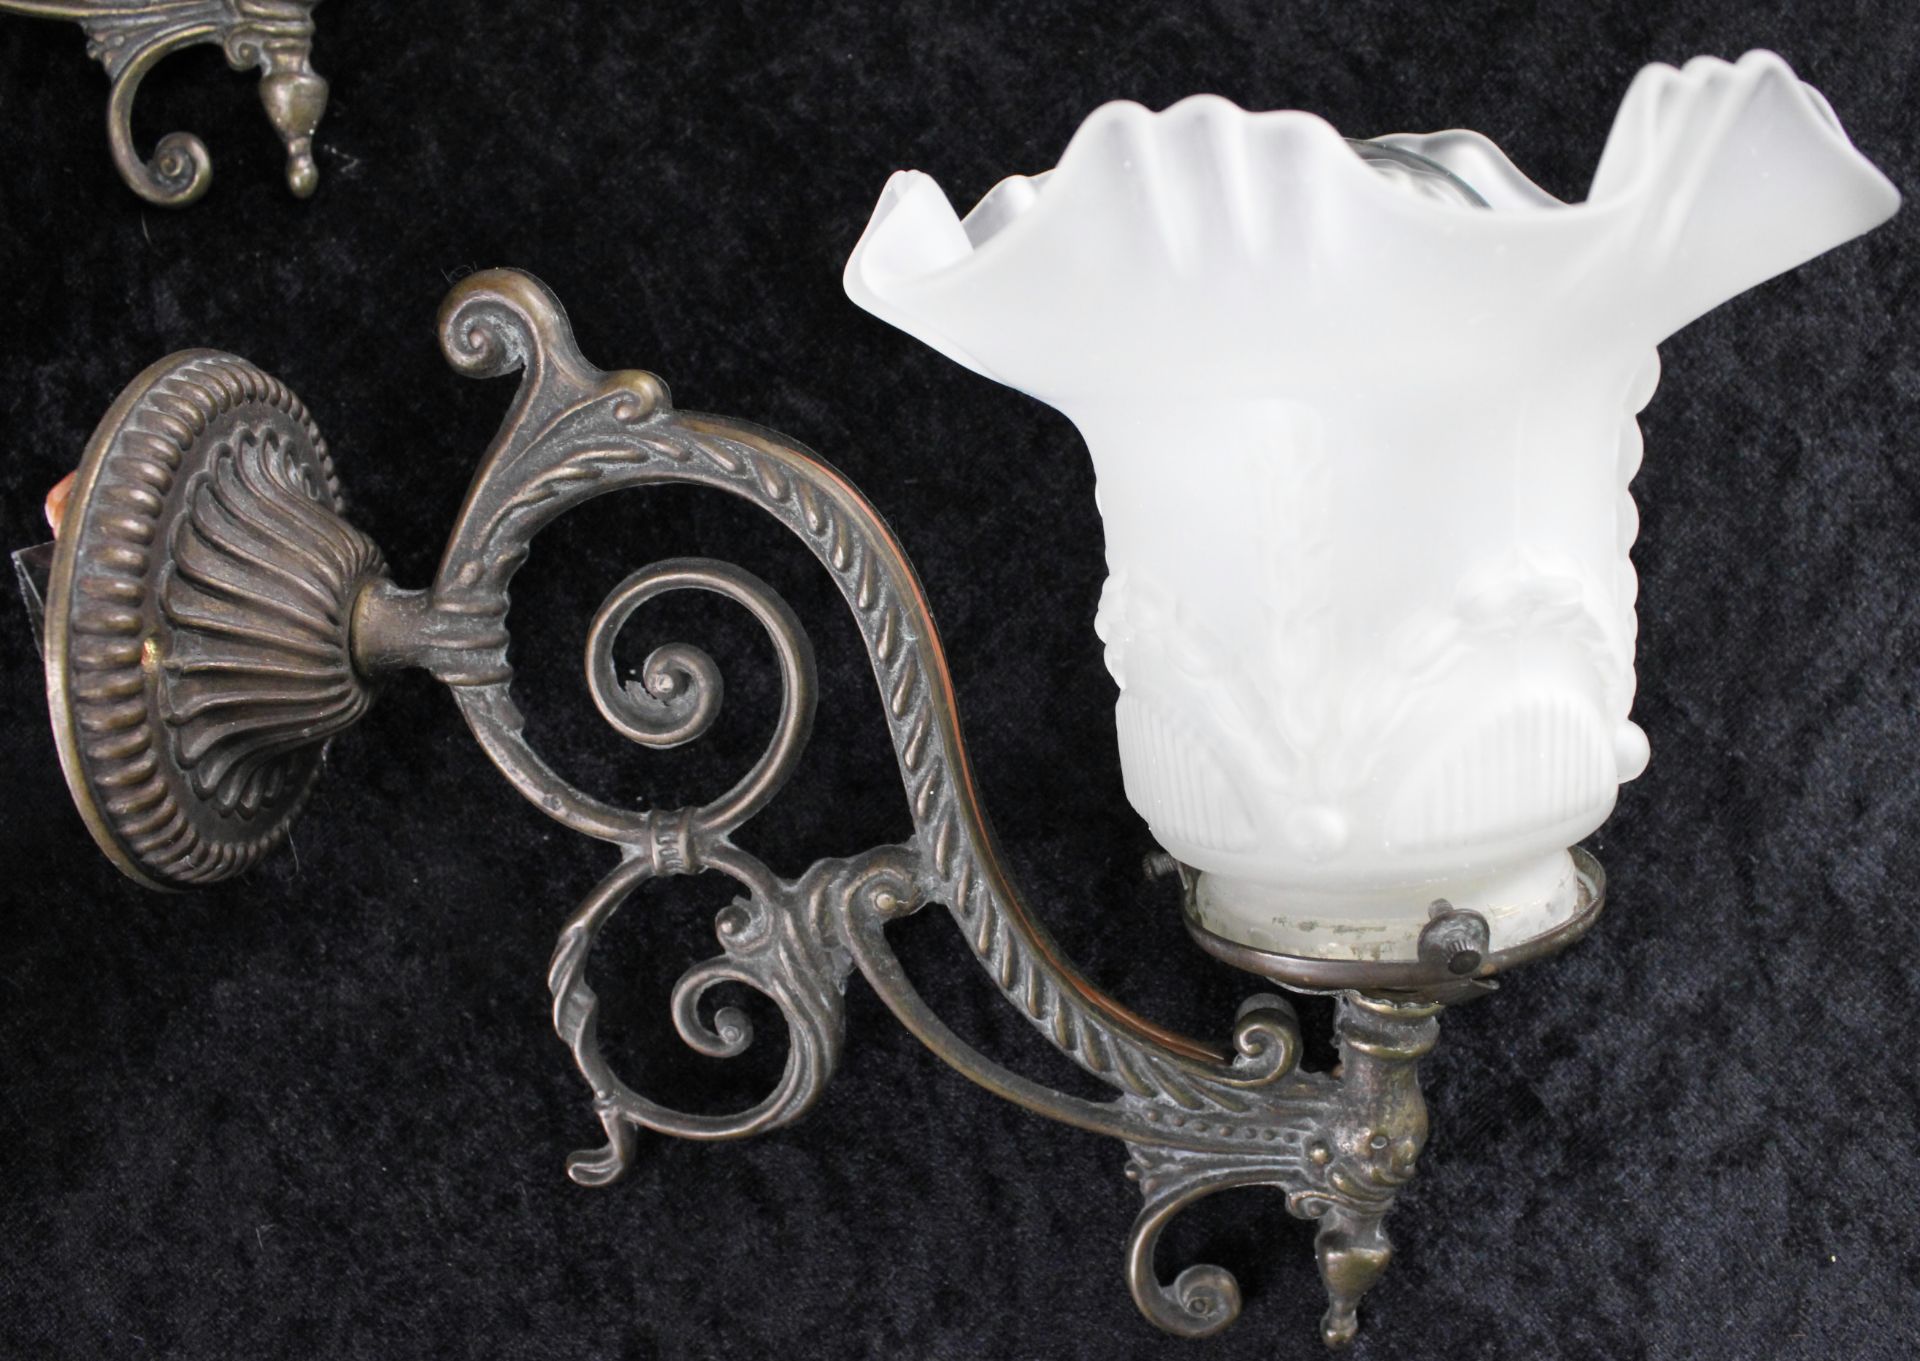 3-er Set Jugendstil Wandlampen, Glastulpen mit geschwungenen Messingarmen, um 1920 - Bild 4 aus 4